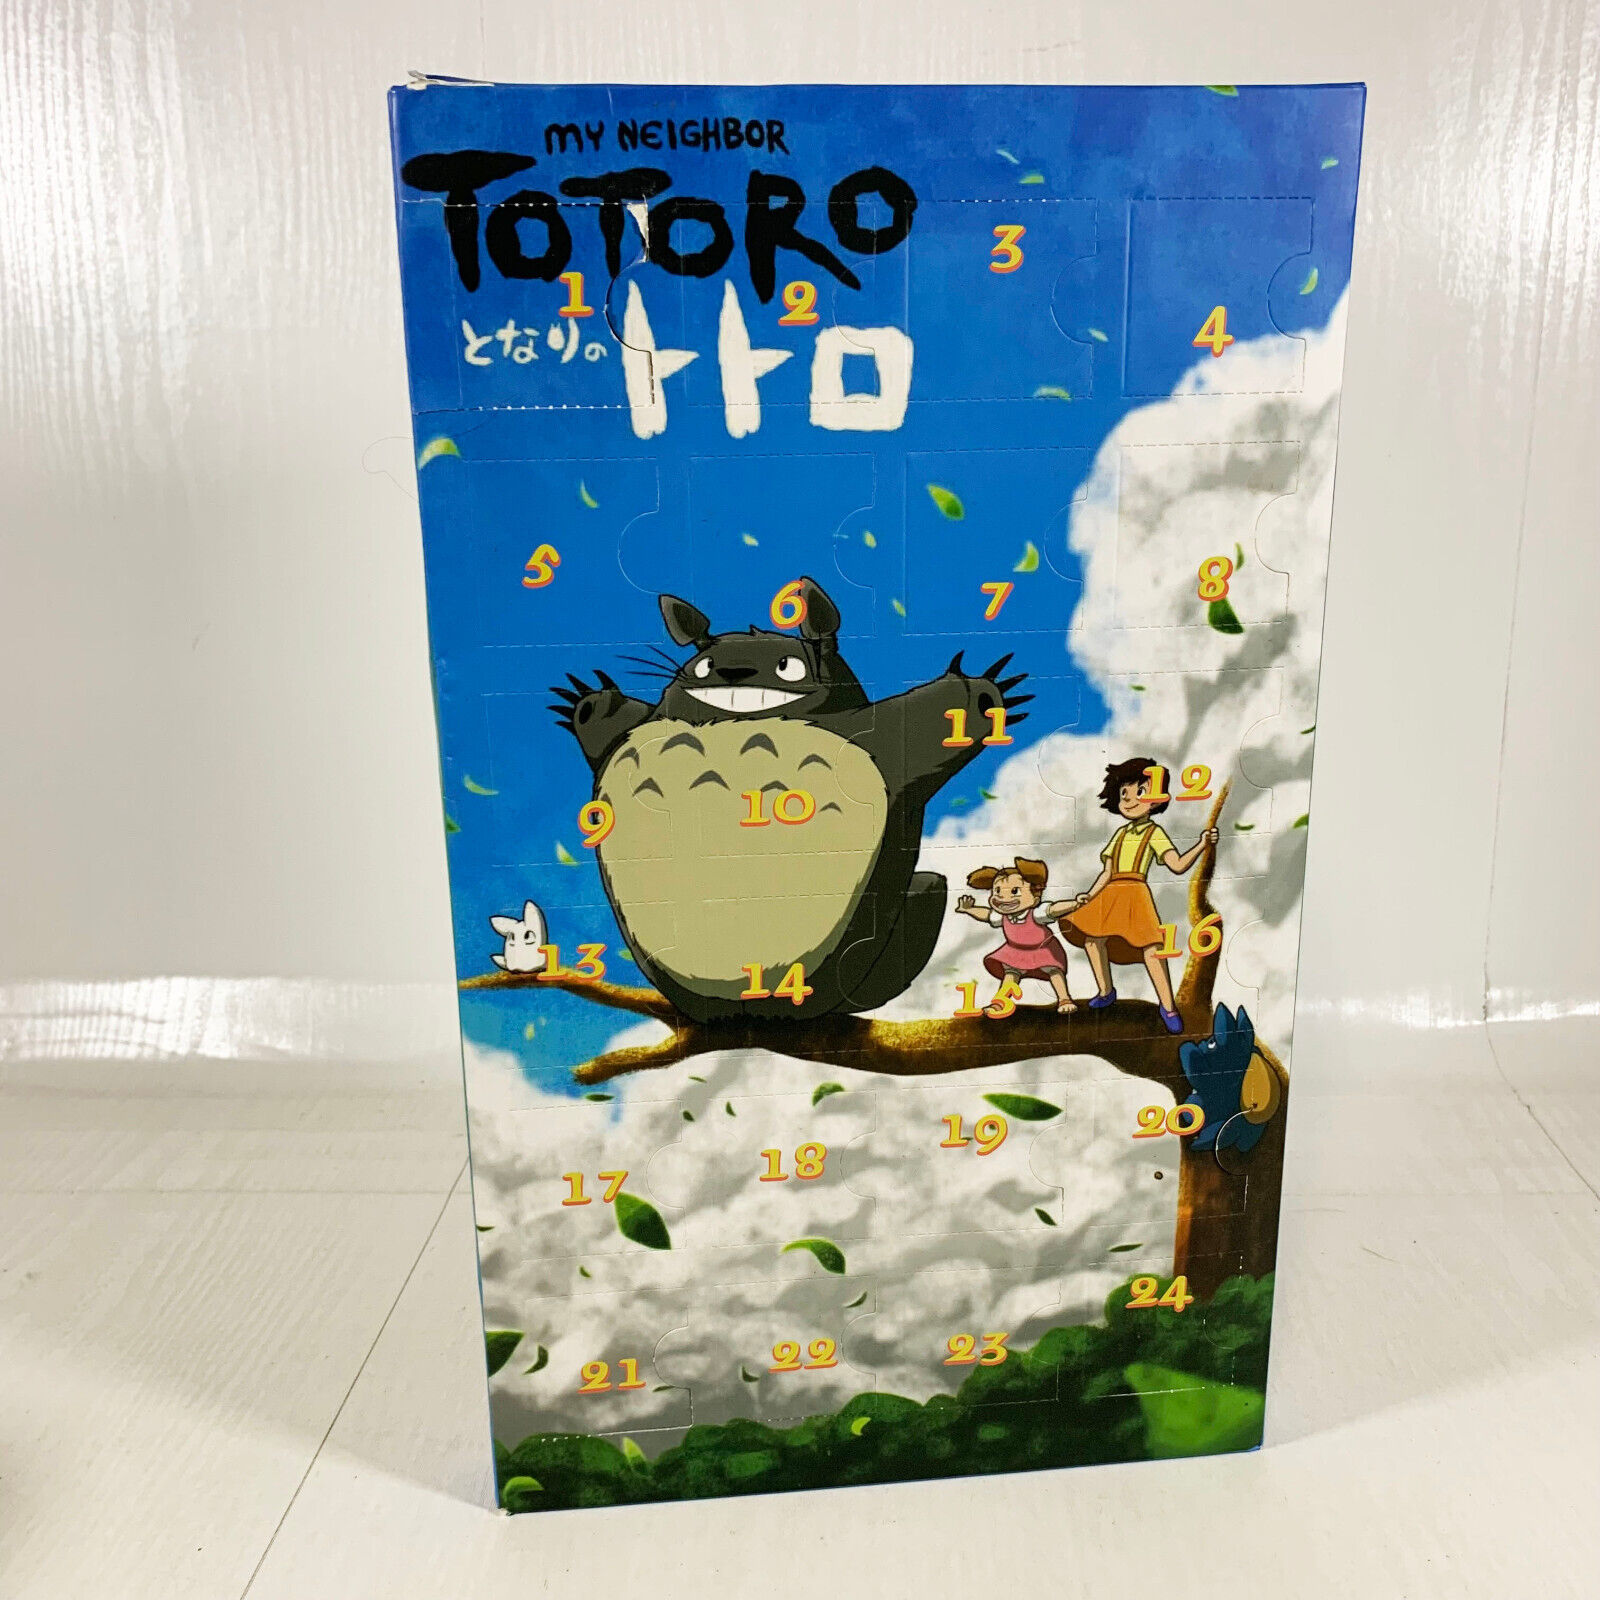 RARE My Neighbor Totoro Advent Calendar - Missing 1 Figure